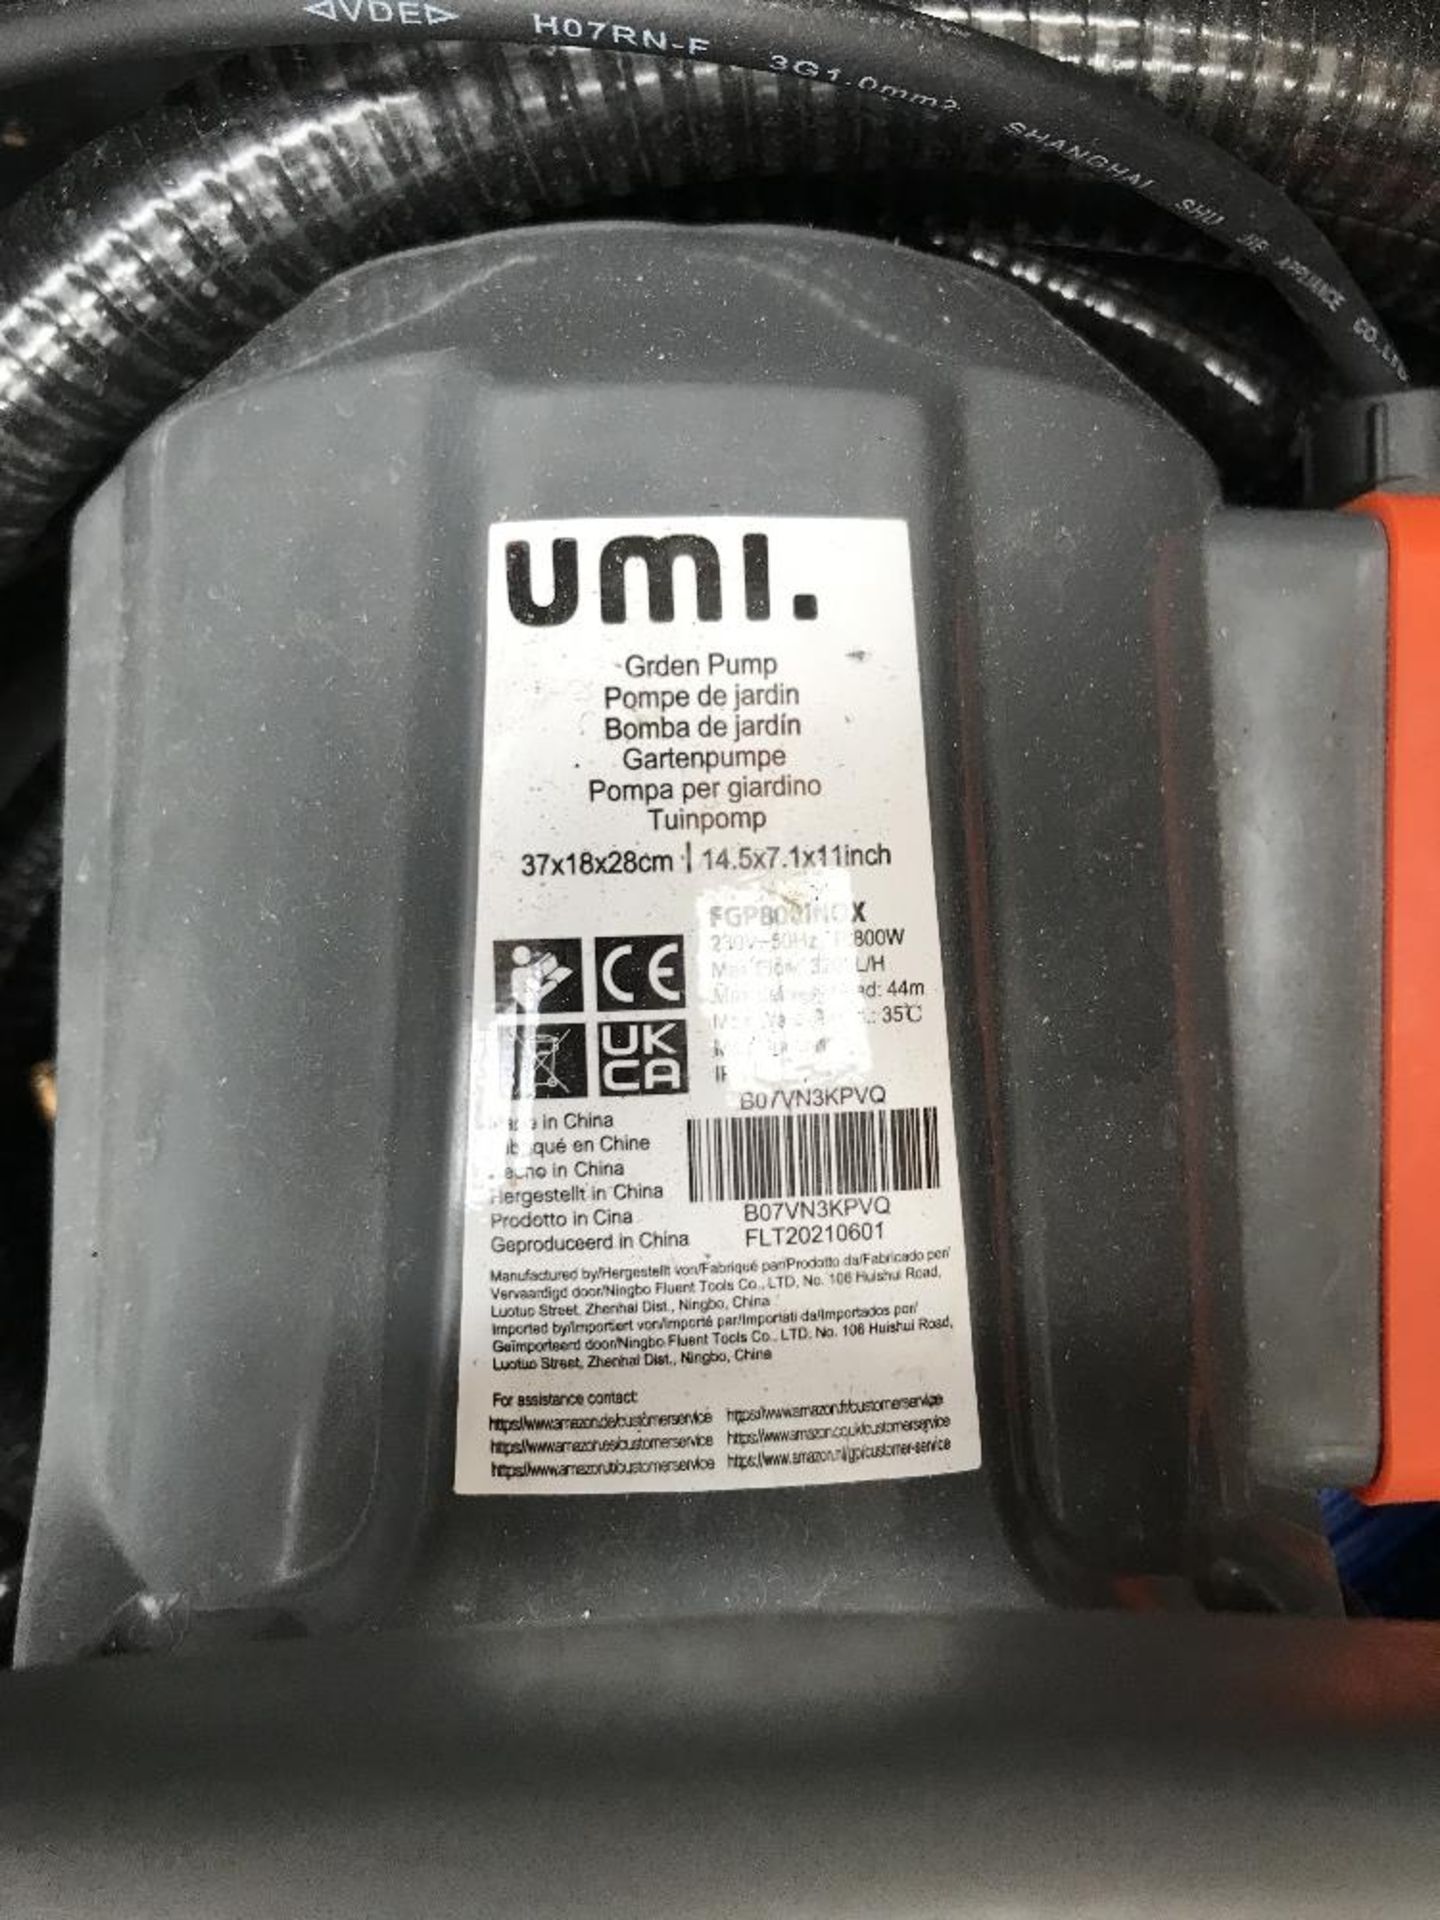 Umi Garden Pump - Image 2 of 2